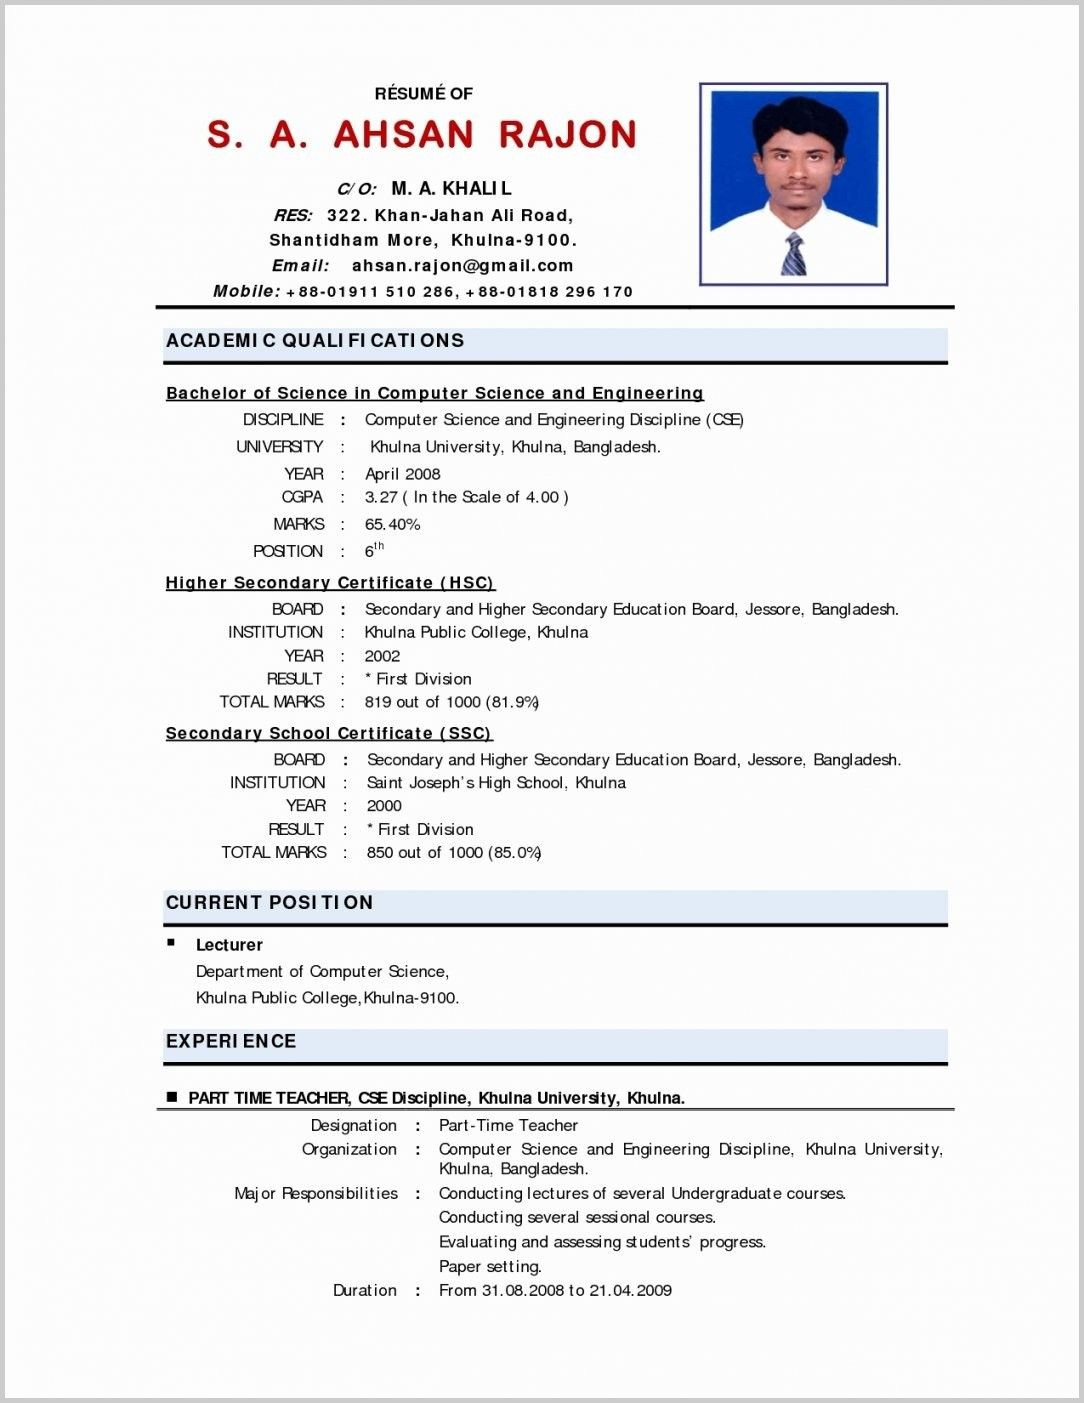 Sample Resume for Computer Science Teacher In India Resume format India – Resume format Job Resume format, Best …